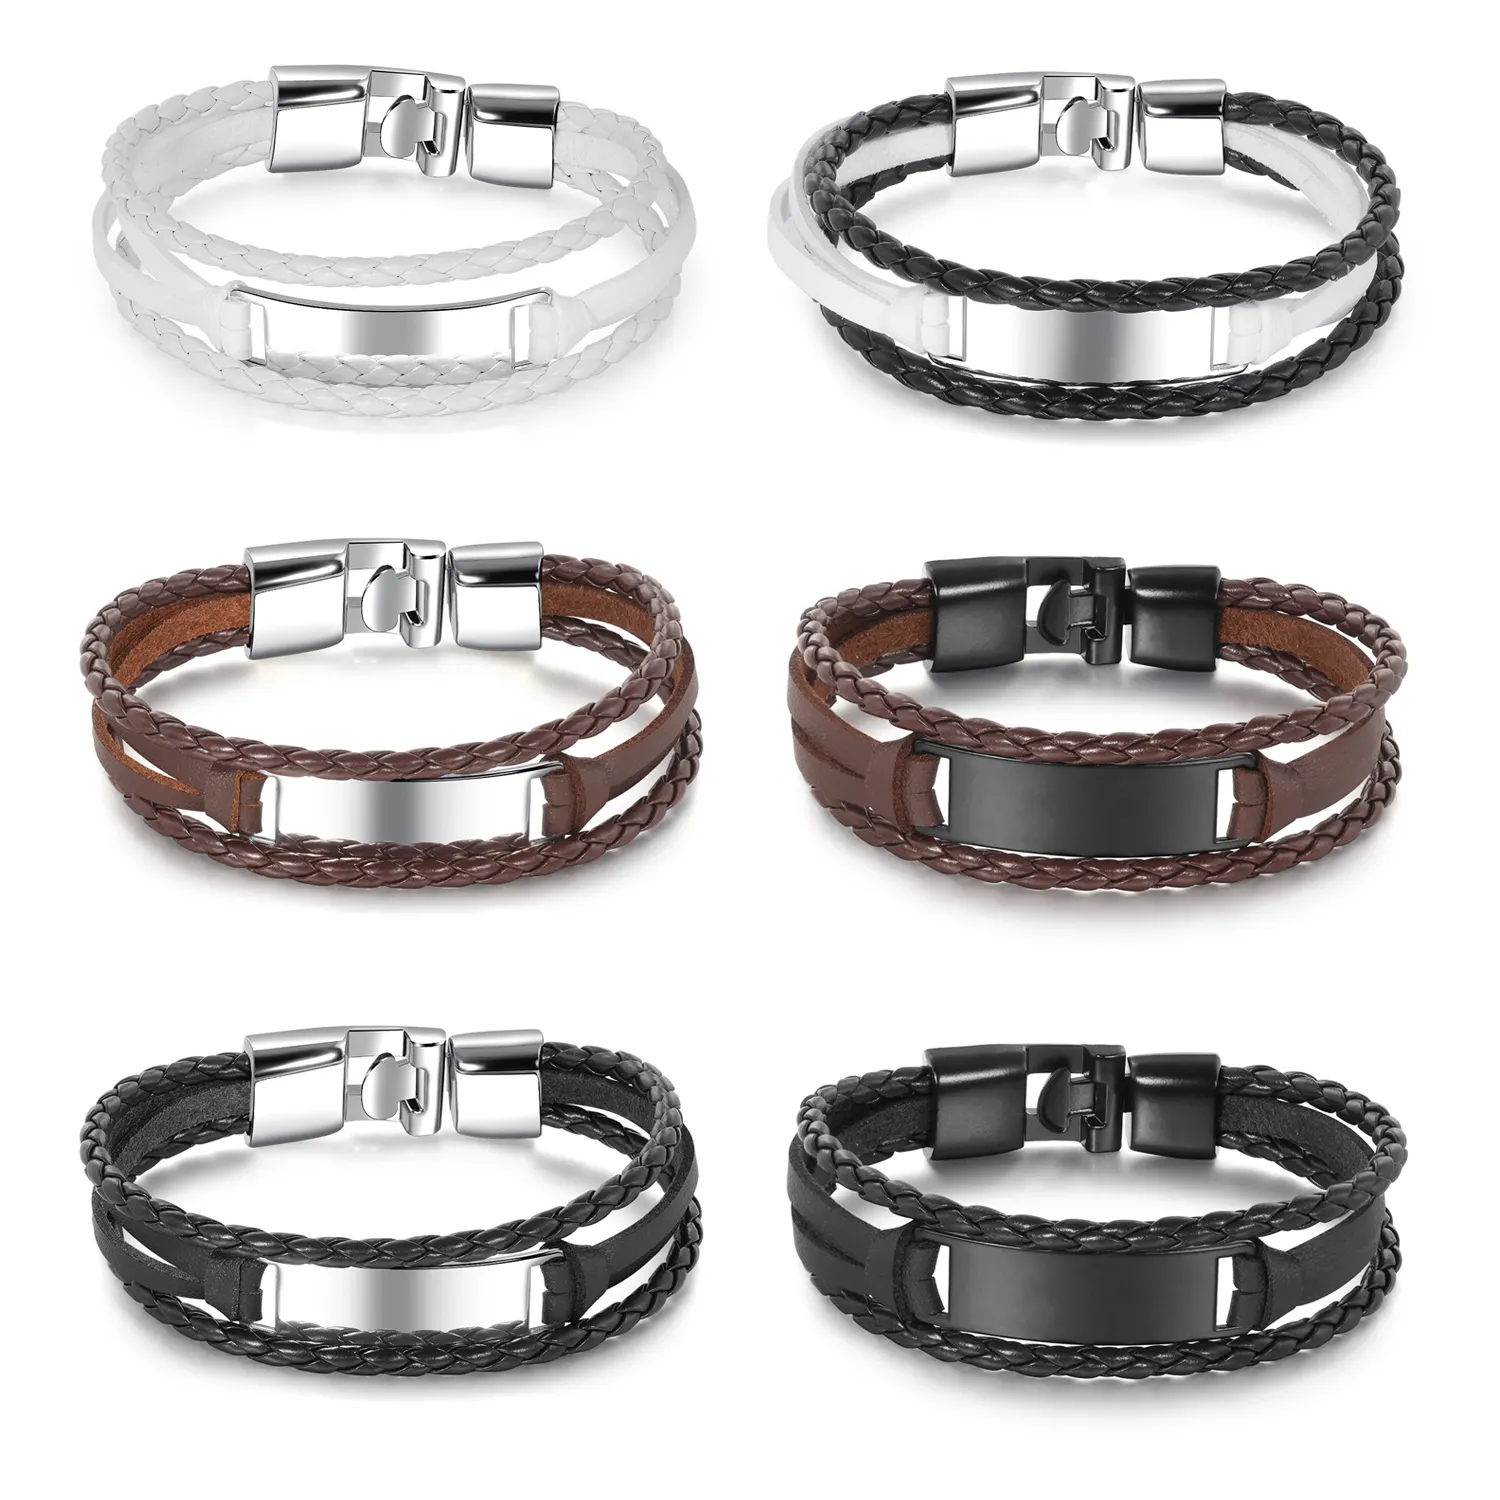 Handmade Multilayer Men Leather Braided Bracelets New Fashion Adjustable Cheap Black Alloy Mens Leather Wrap Bracelet